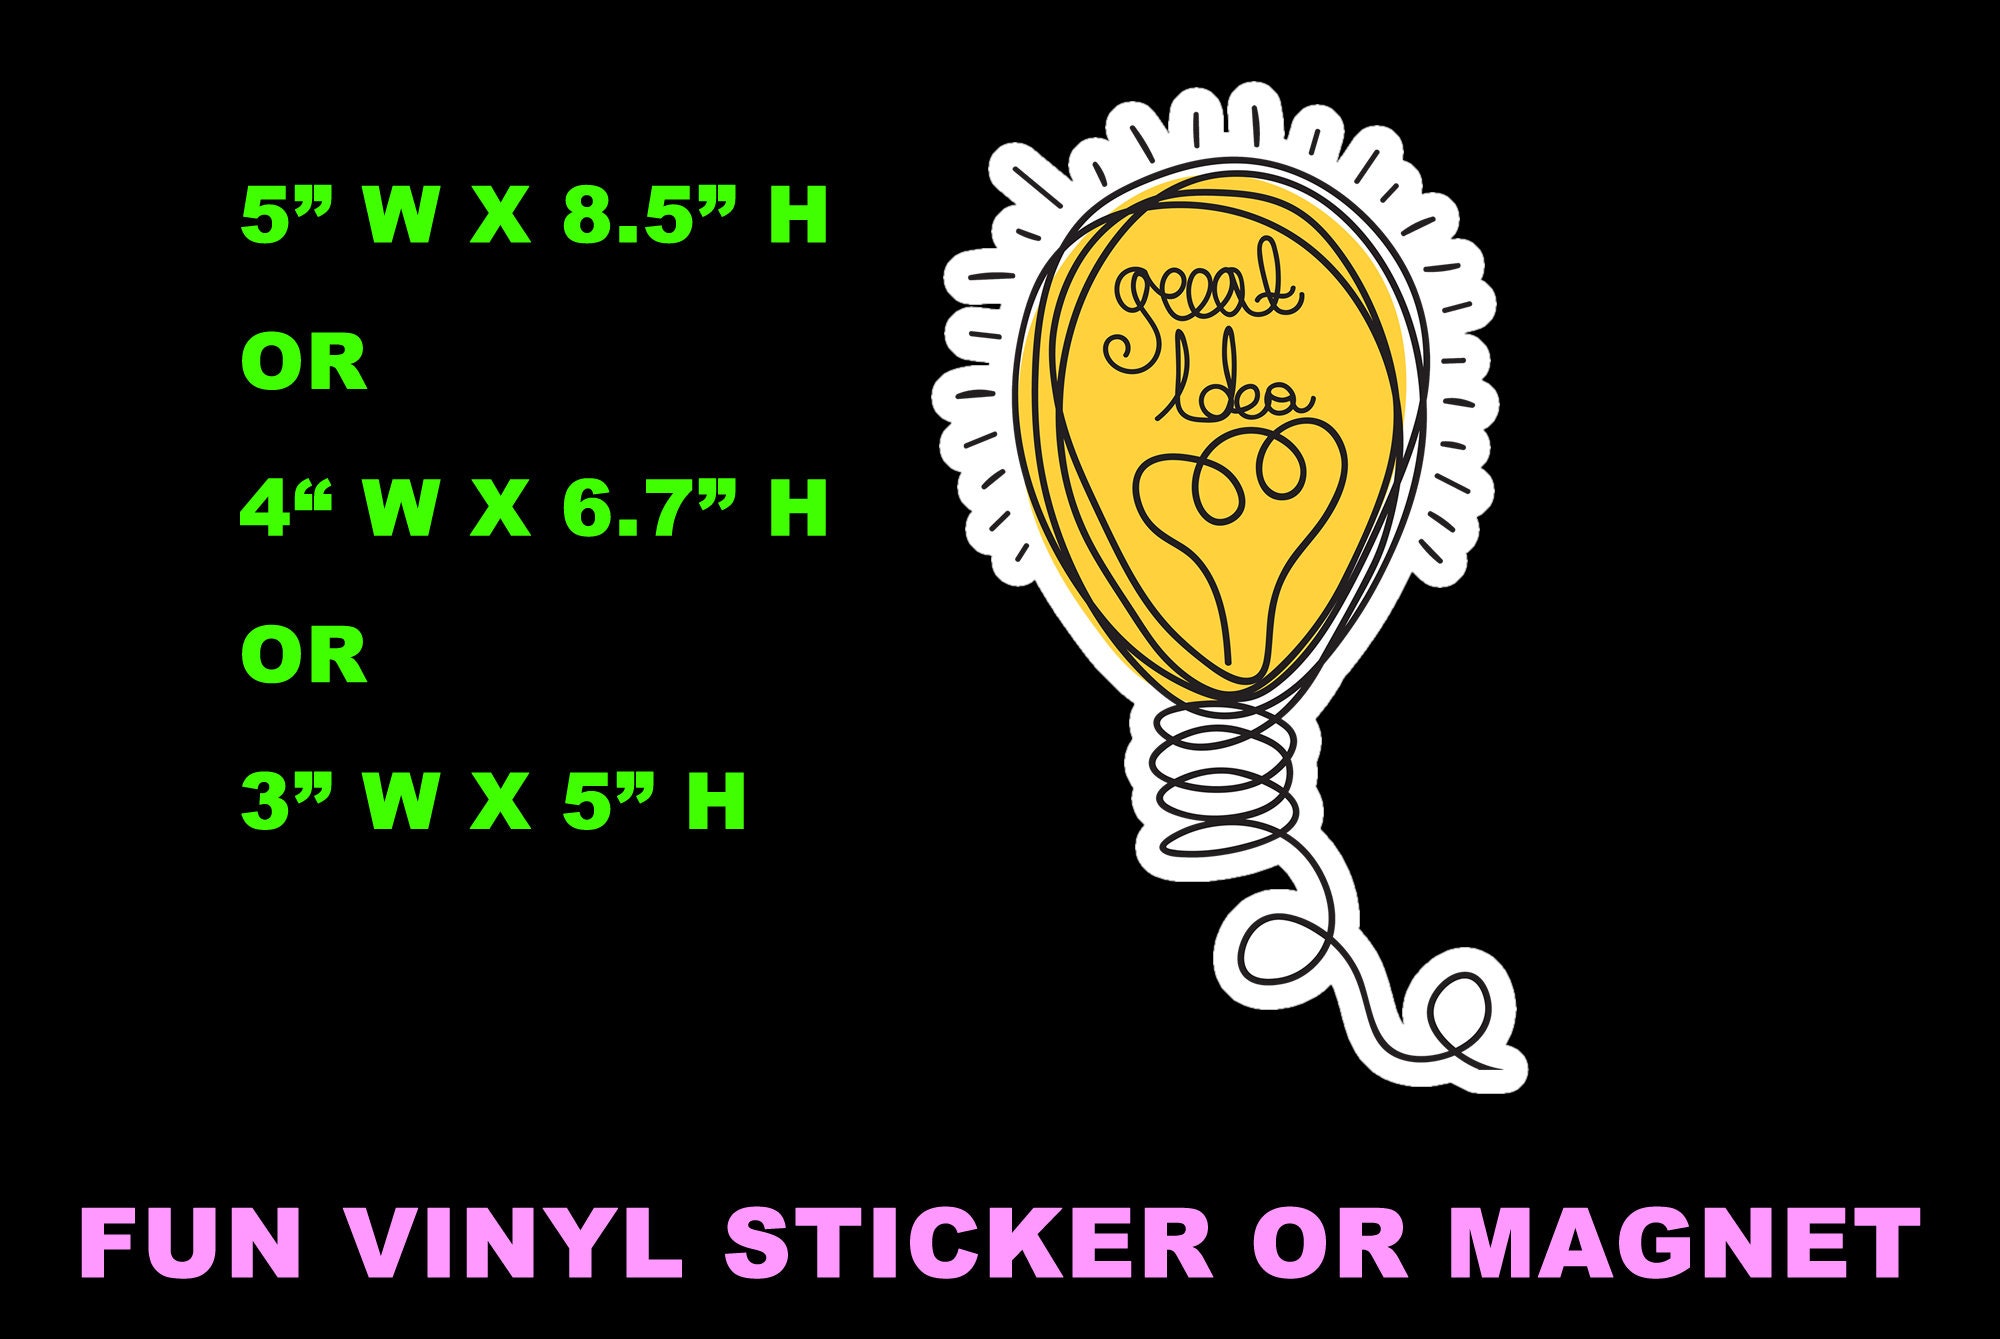 Good Idea Light Bulb Sticker or Magnet in 5